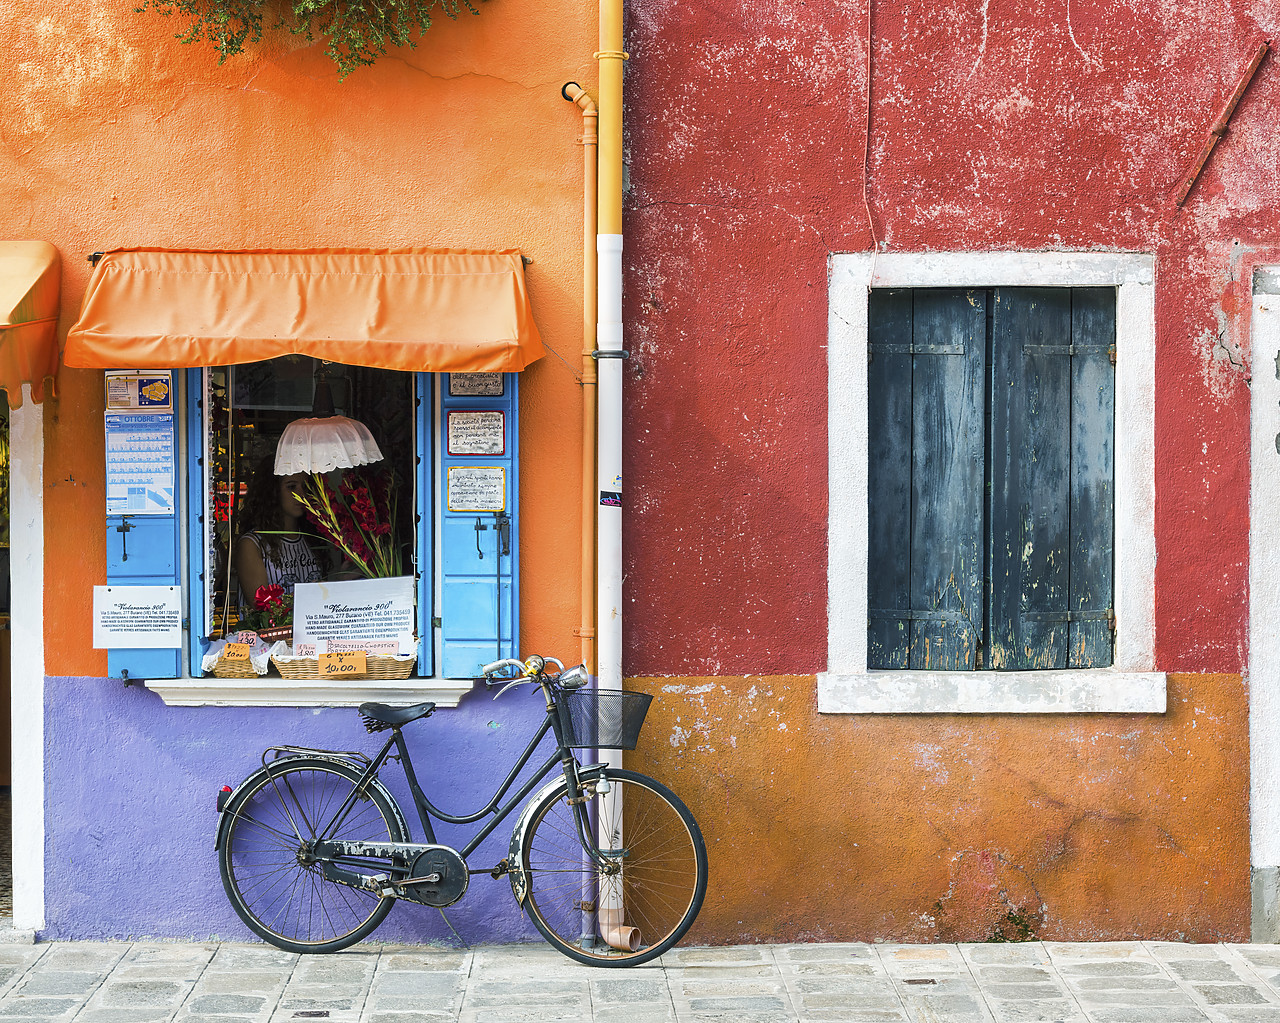 #140438-1 - Colourful Shop & Bike, Burano, Venice, Italy